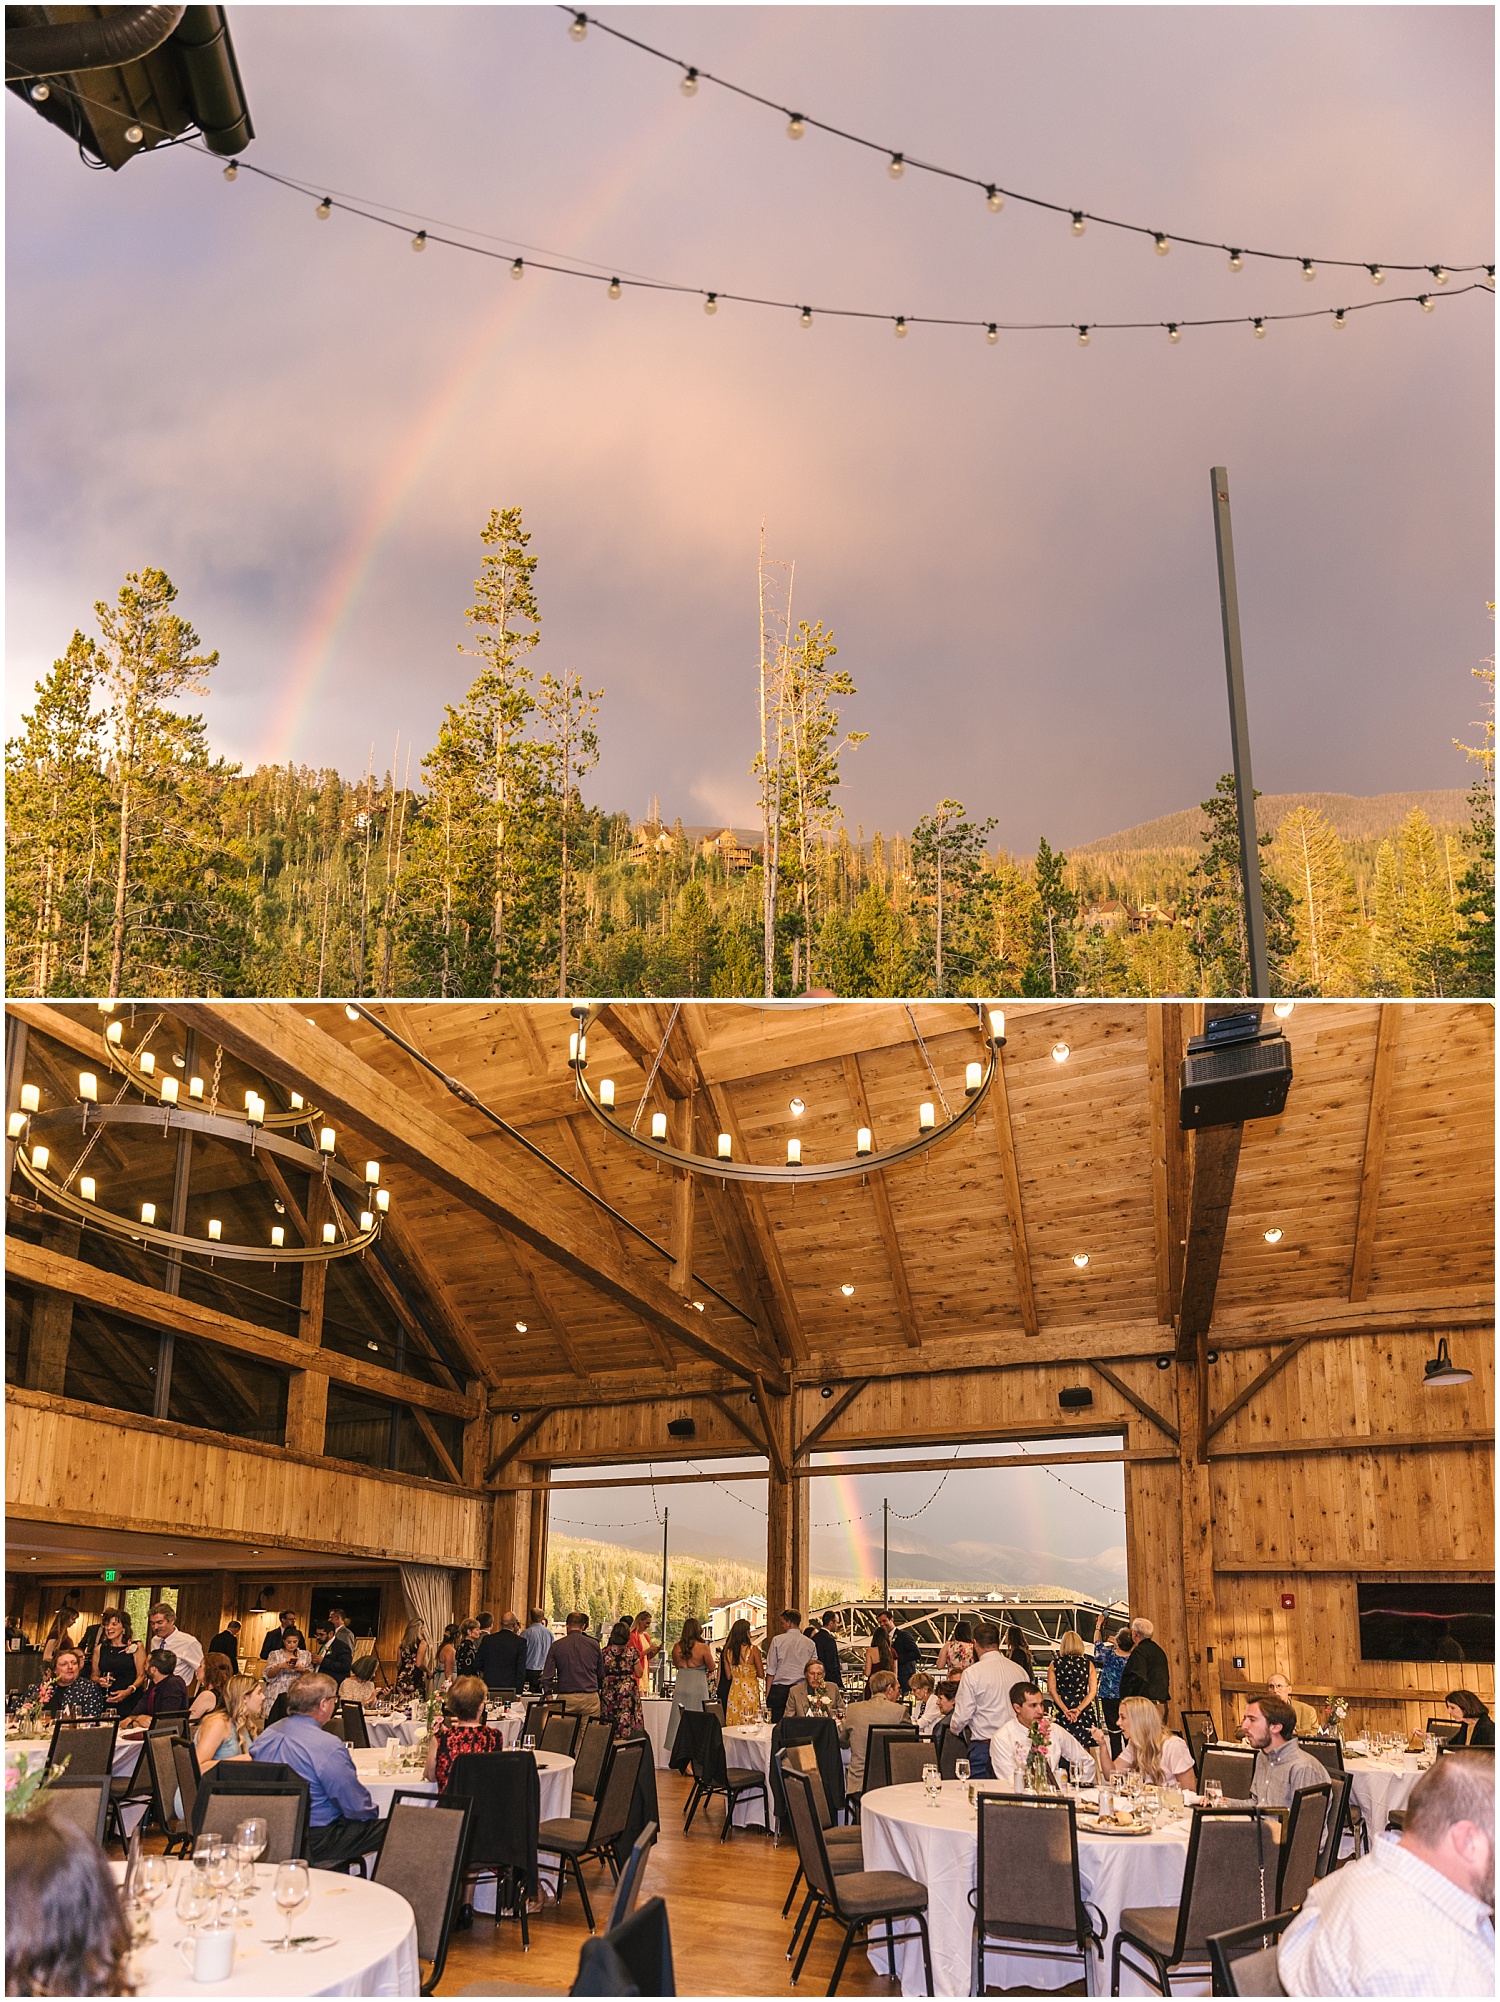 Rainbow over Headwaters Center wedding reception in Winter Park Colorado